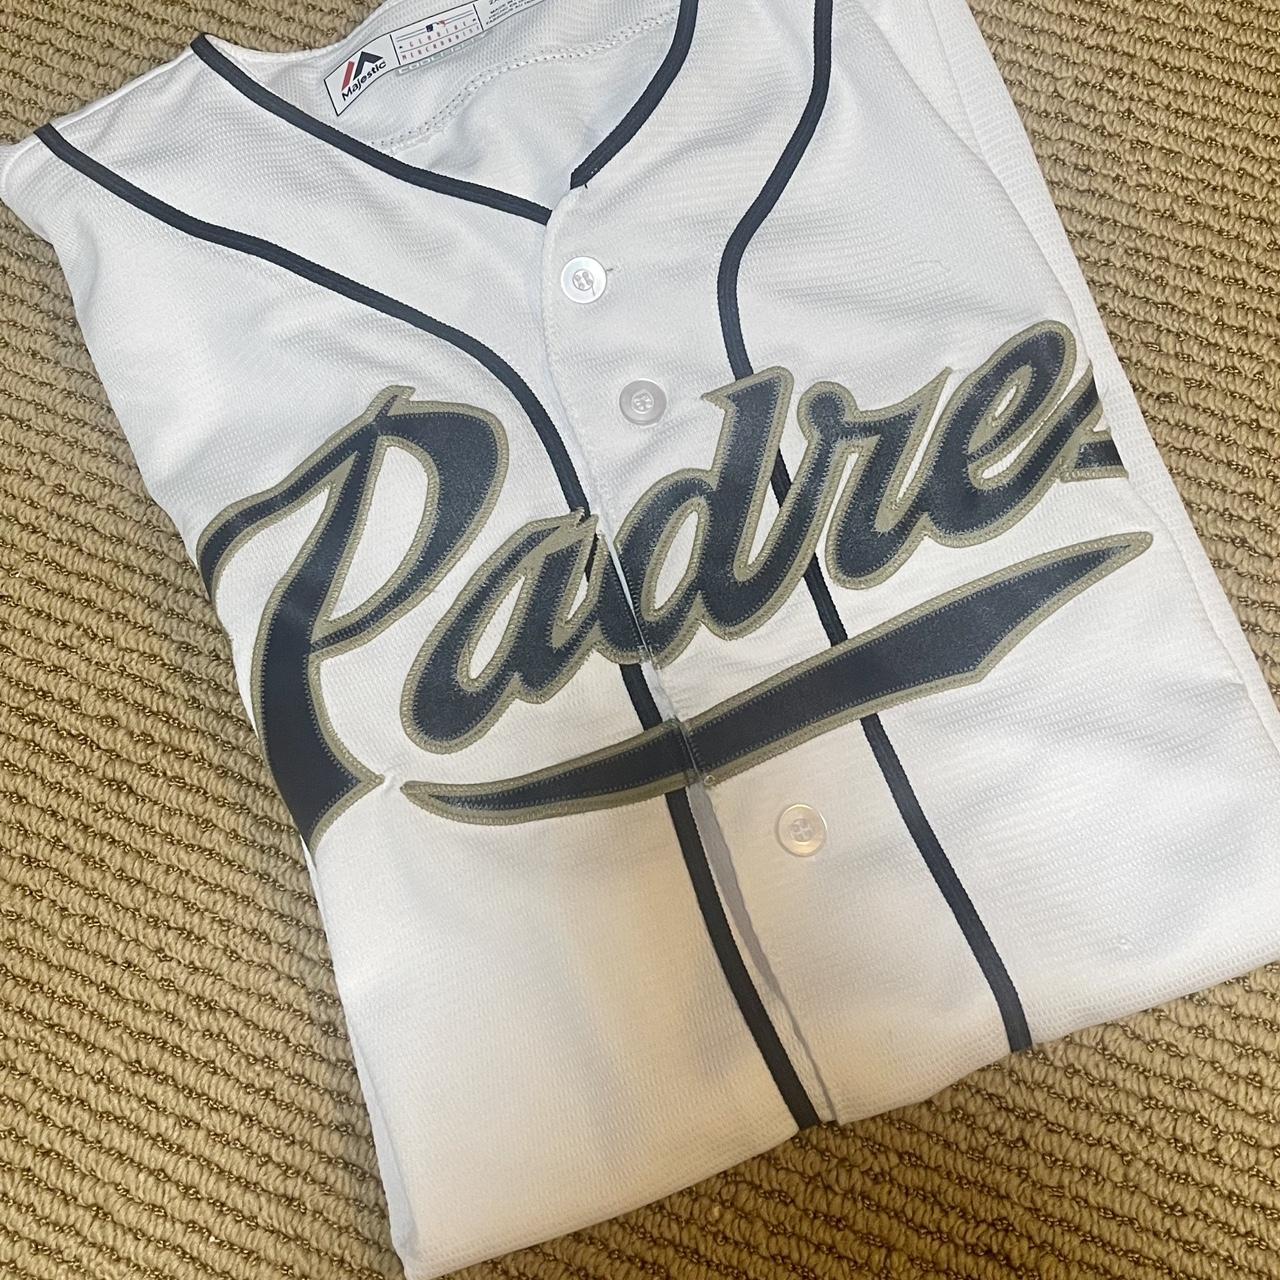 White San Diego Padres basbeball jersey Majestic - Depop